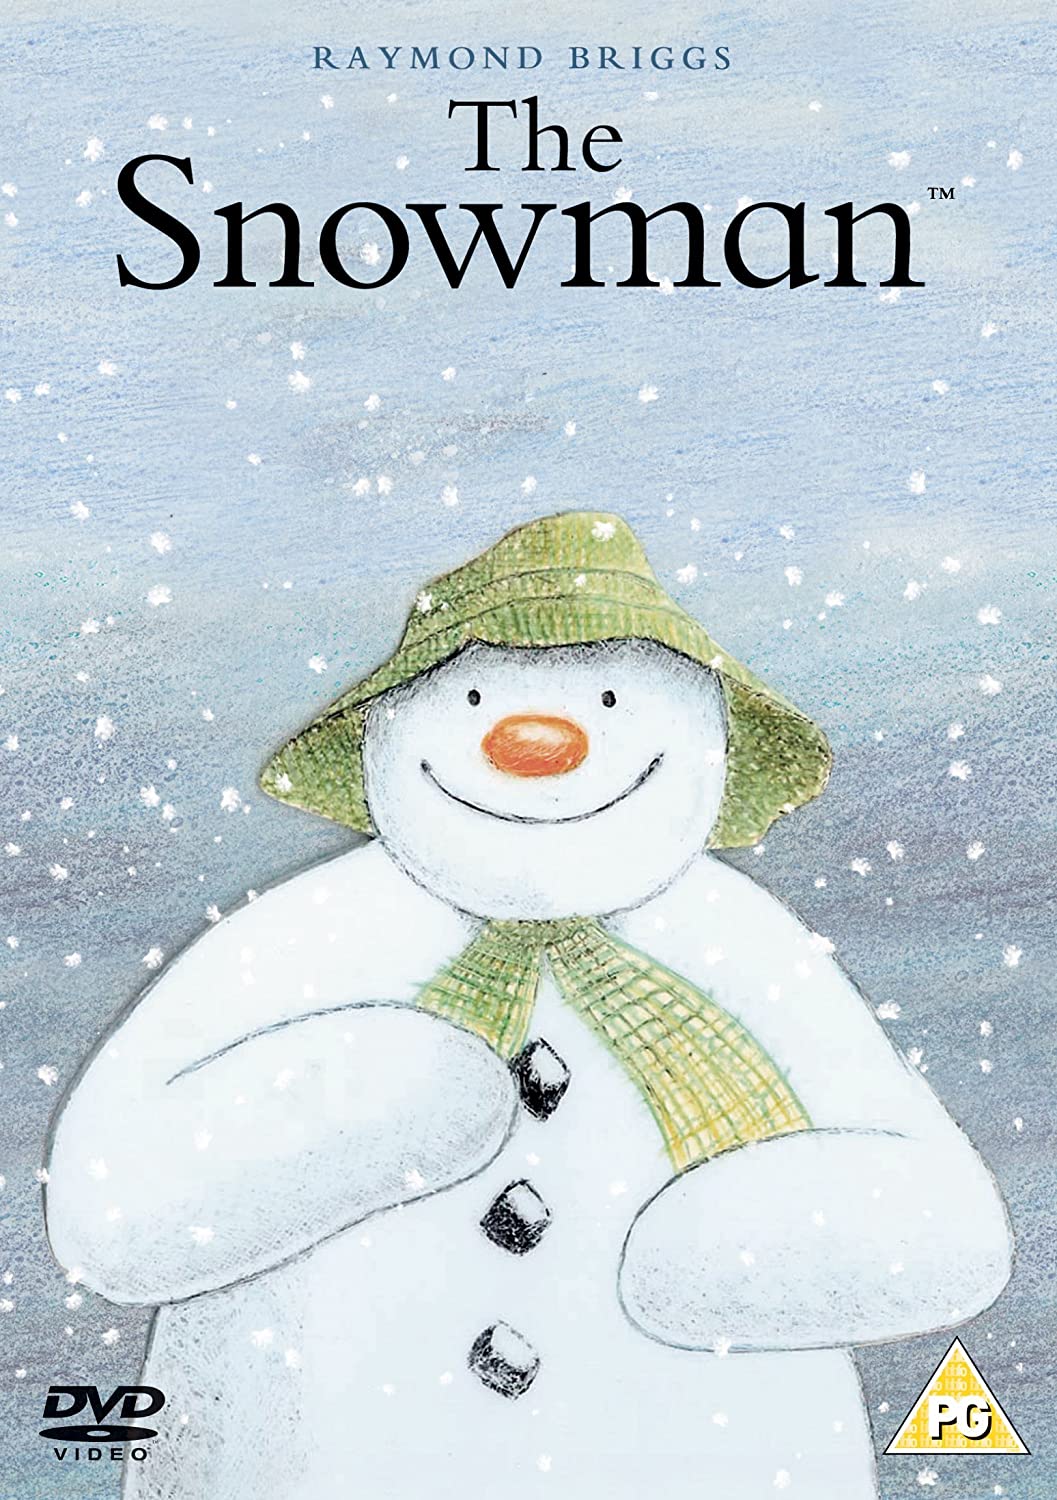 The Snowman (Christmas Decoration) [1982] - Animation [DVD]